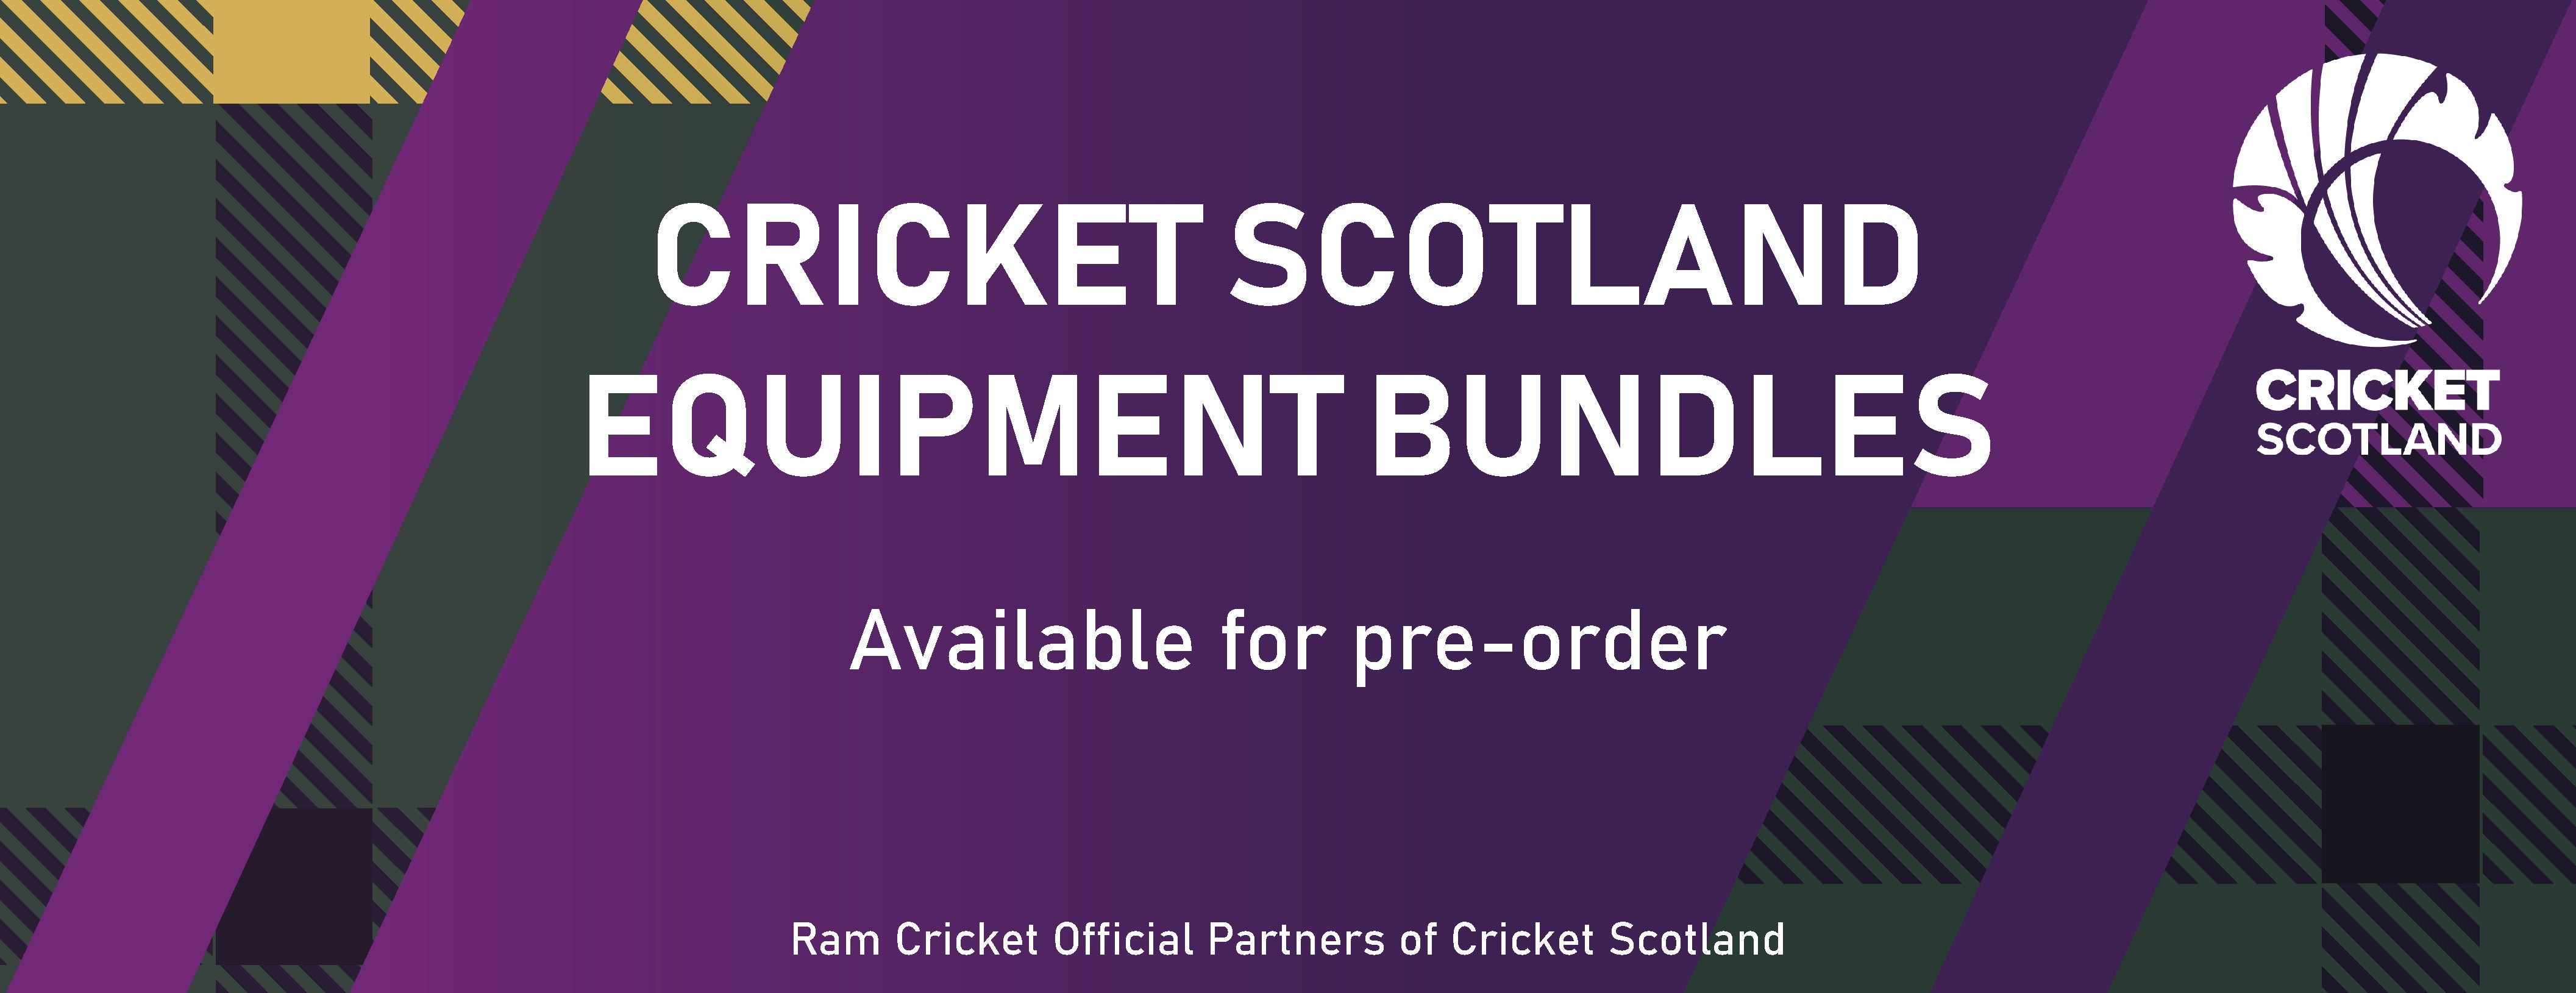 Cricket Scotland Equipment Bundle